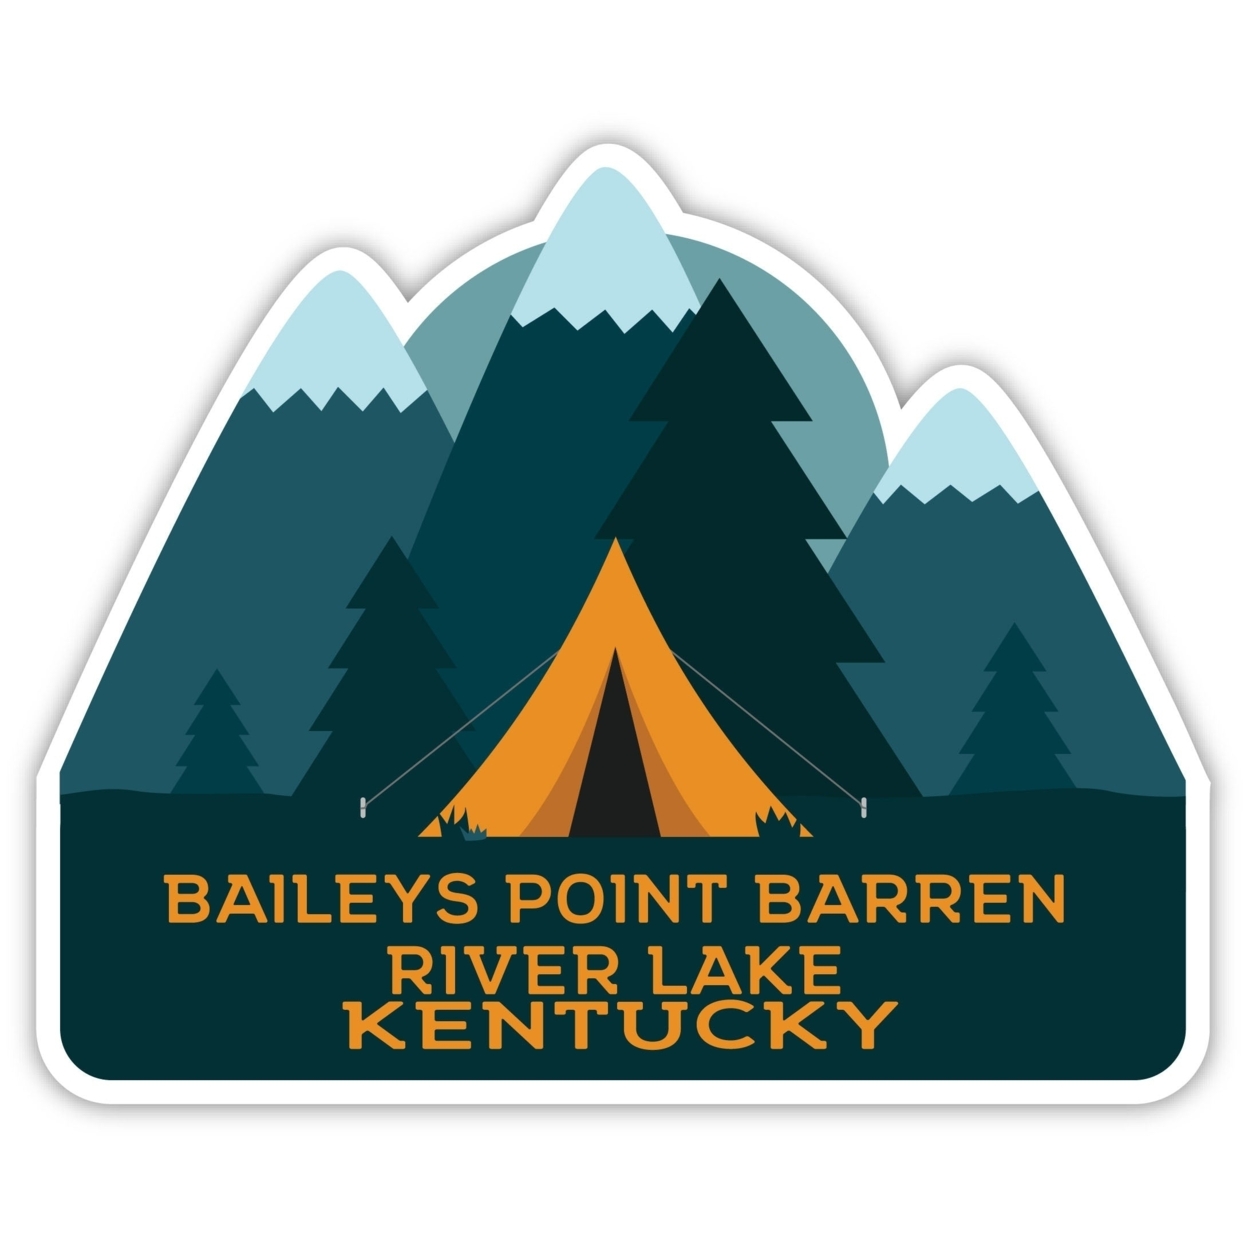 Baileys Point Barren River Lake Kentucky Souvenir Decorative Stickers (Choose Theme And Size) - Single Unit, 8-Inch, Tent